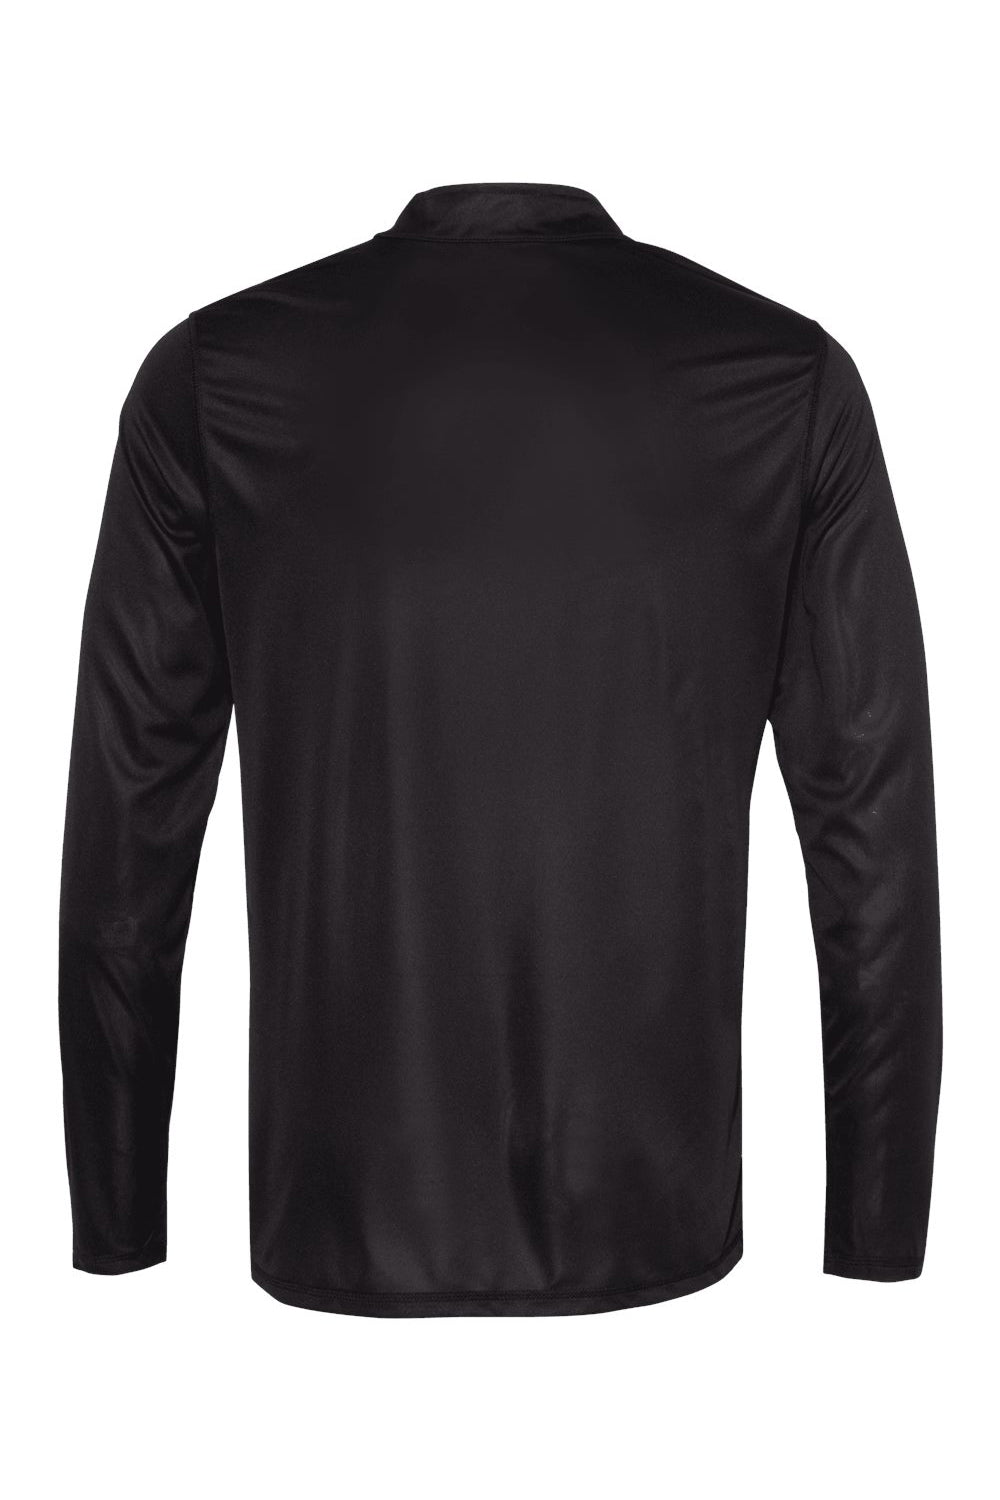 Augusta Sportswear 2785 Mens Attain Performance Moisture Wicking 1/4 Zip Pullover Black Flat Back